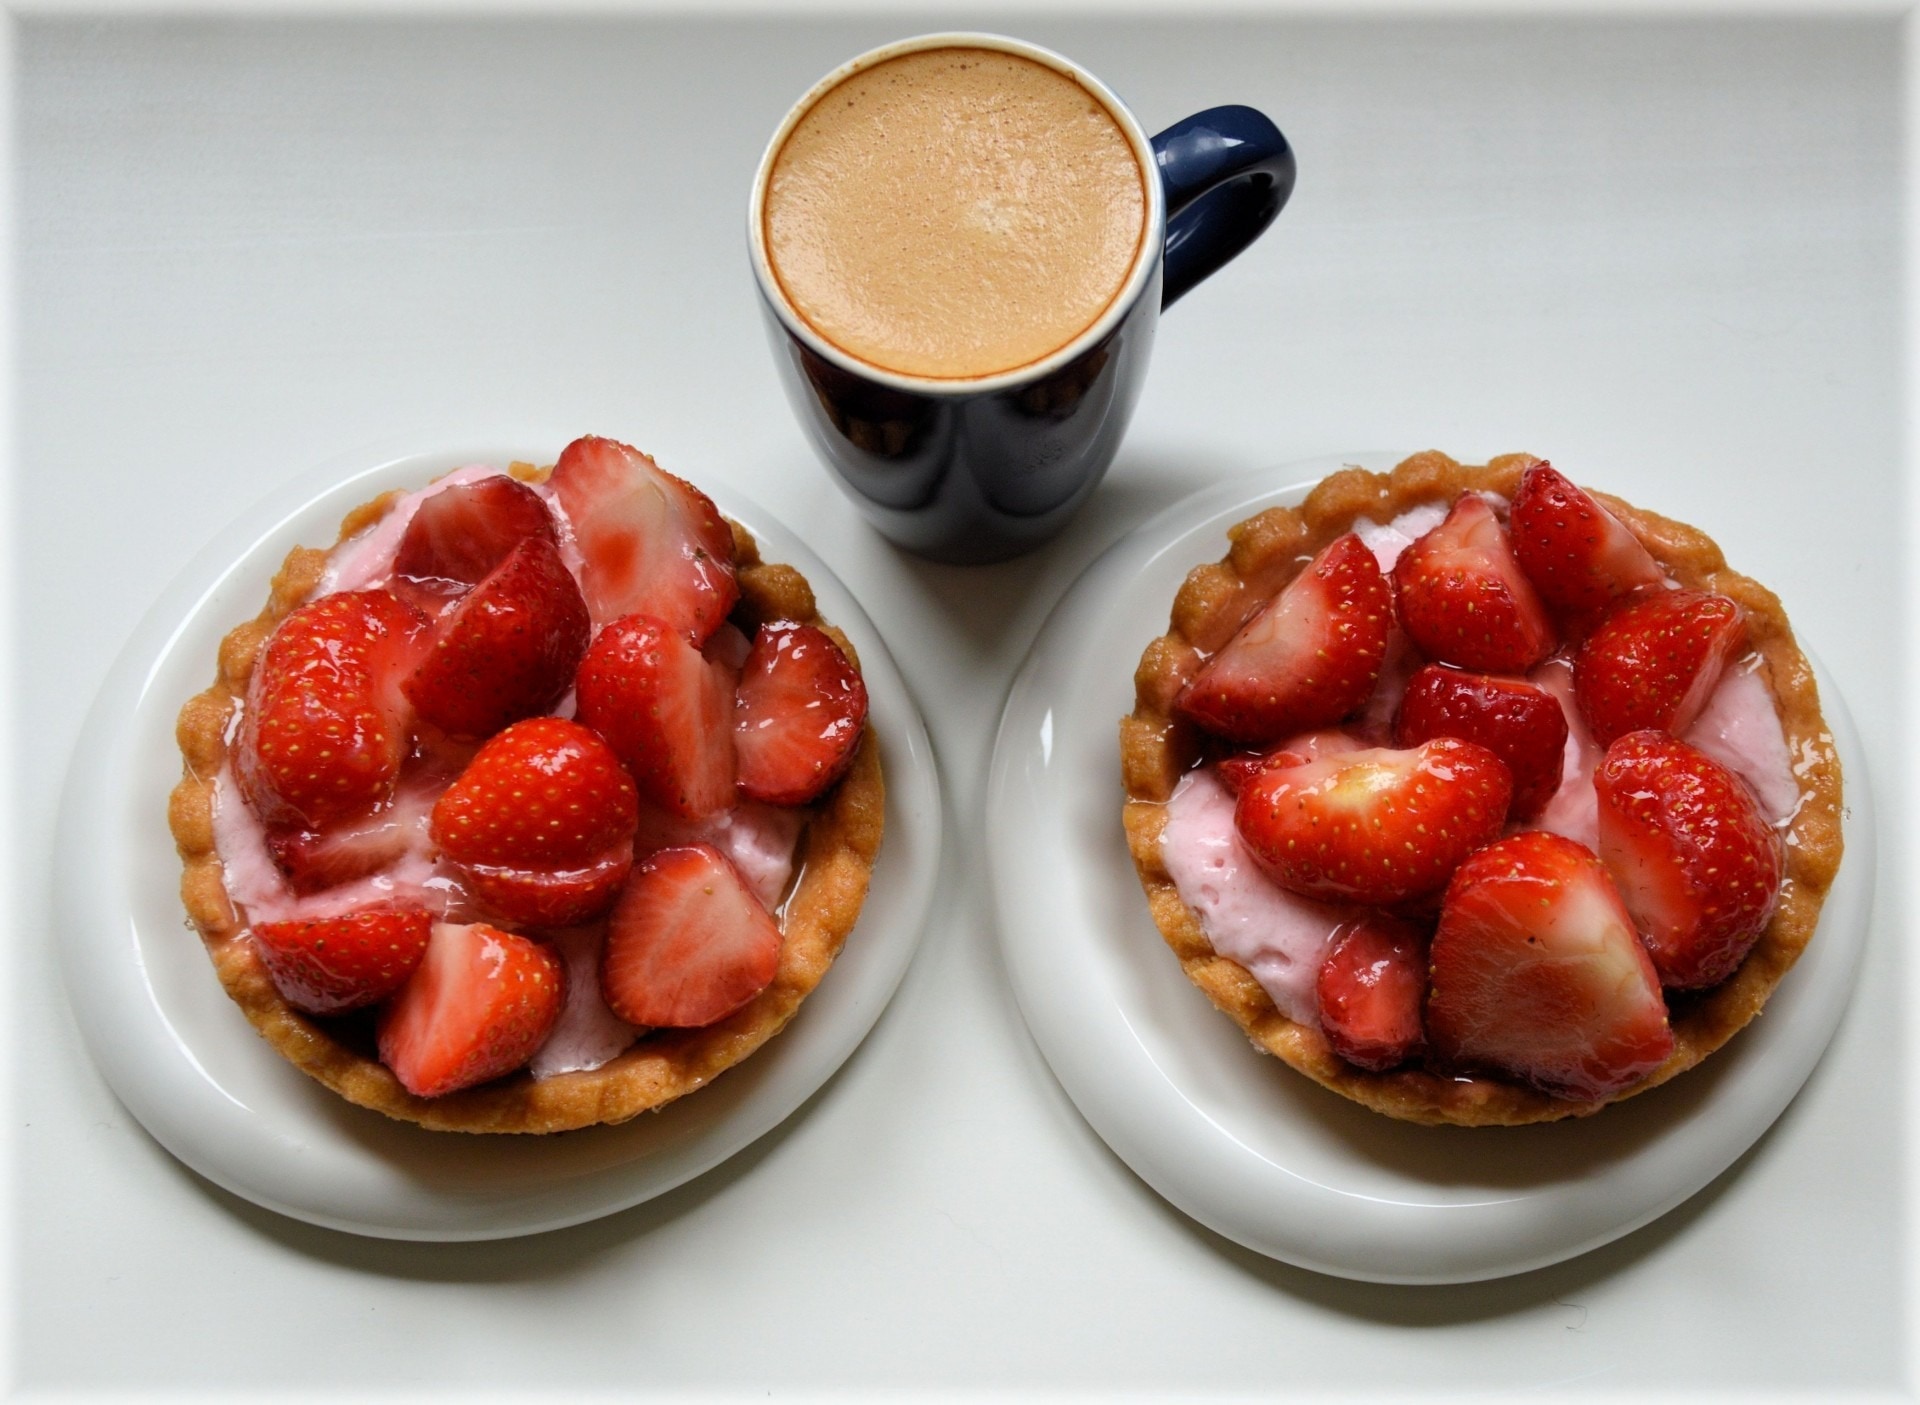 strawberries and black ceramic mug with coffee inside